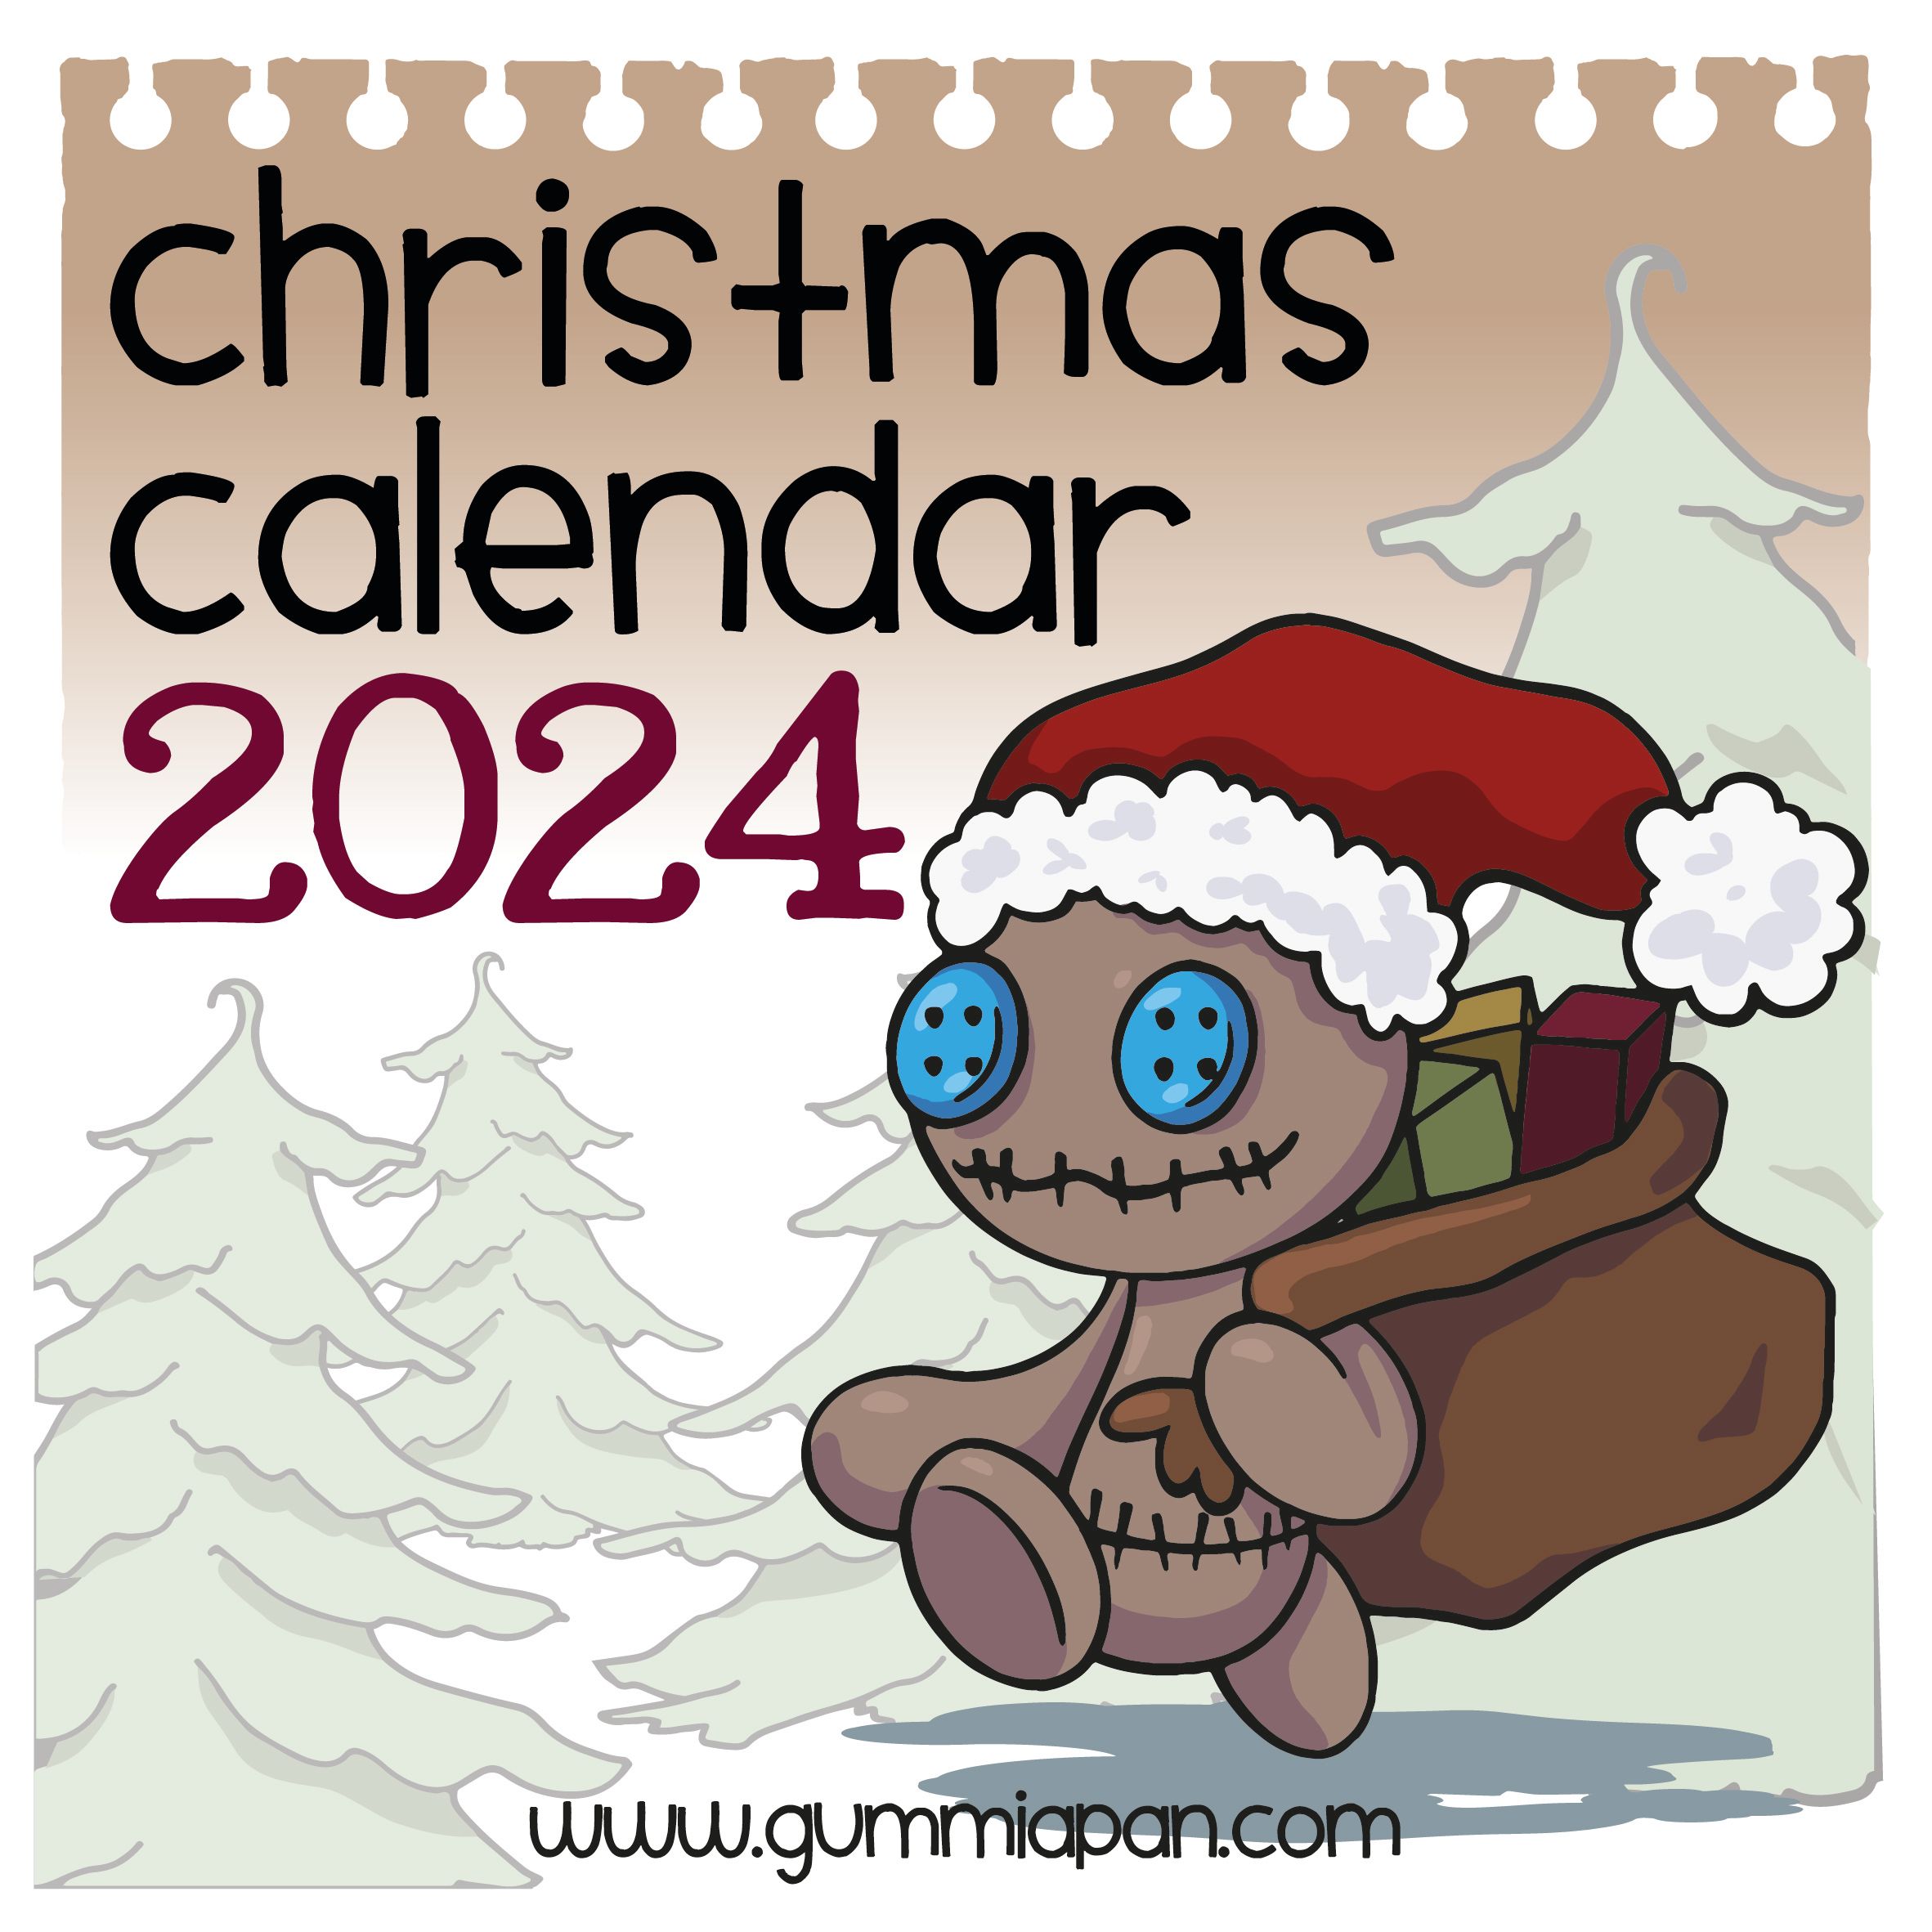 VORBESTELLUNG - Gummiapan: Christmas Calendar 2024 